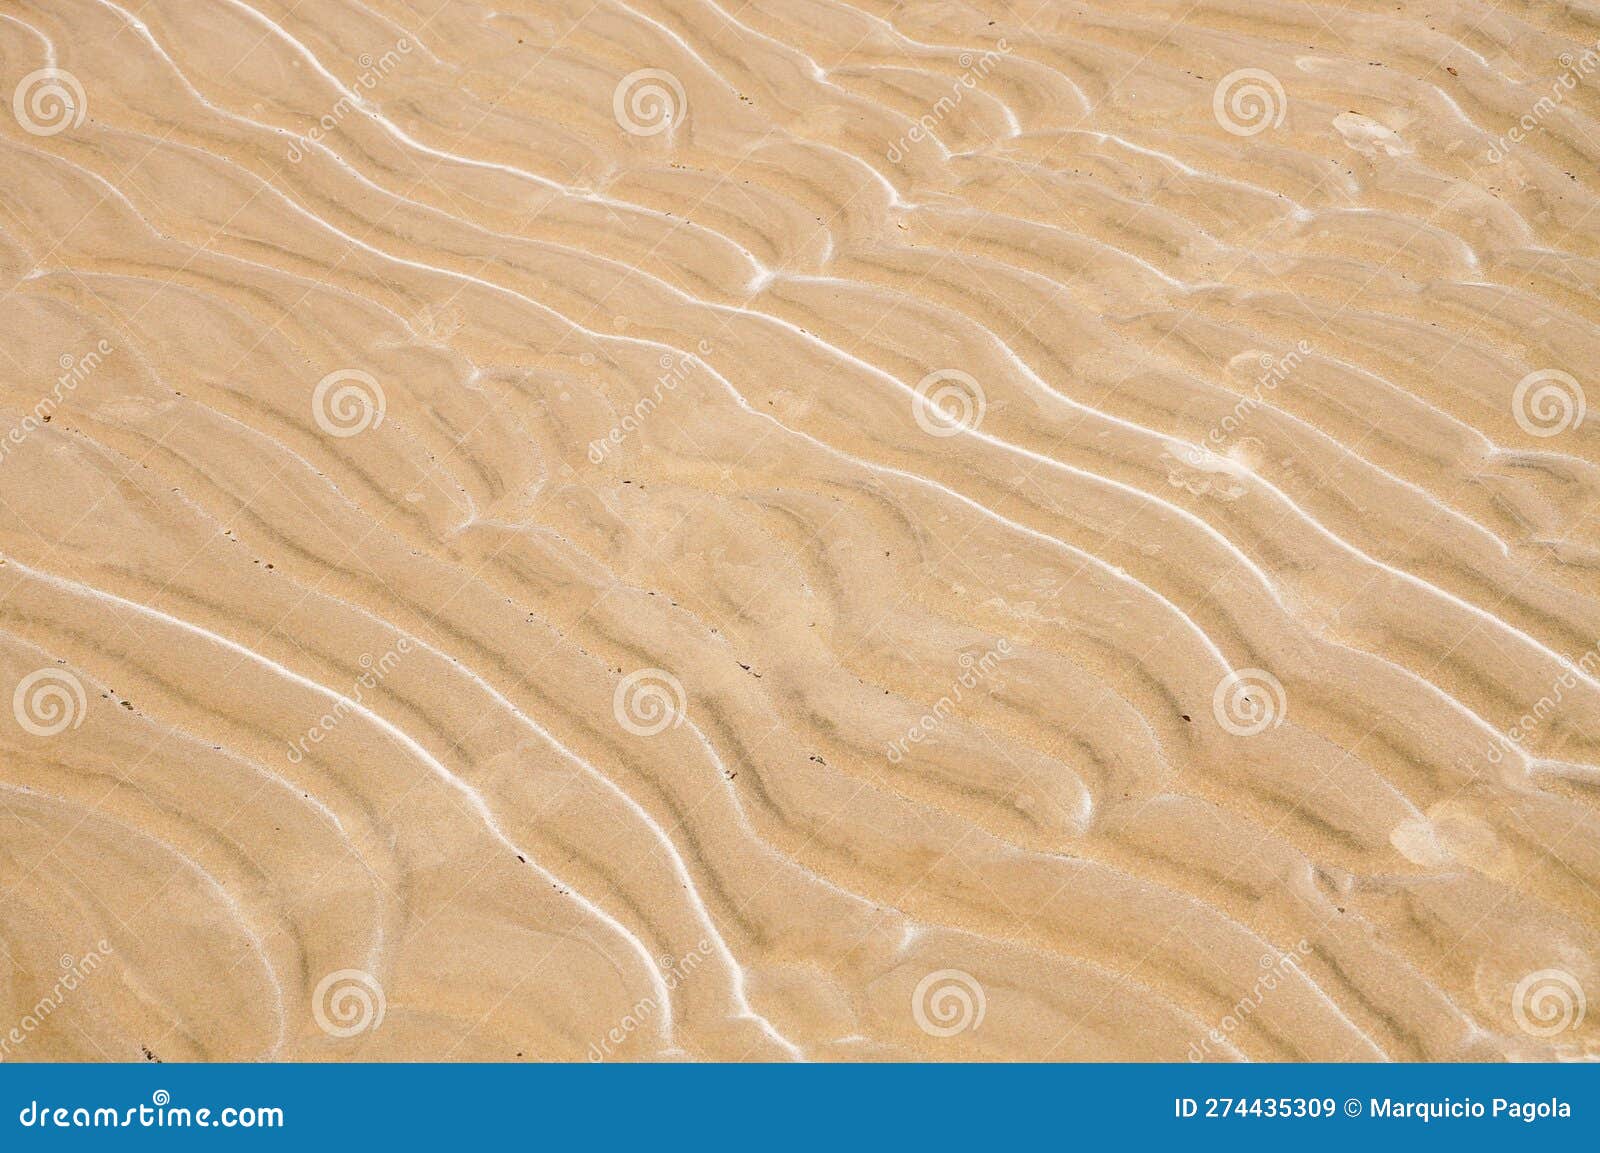 sand patterns in santa ana beach, near juan lacaze, colonia, uruguay